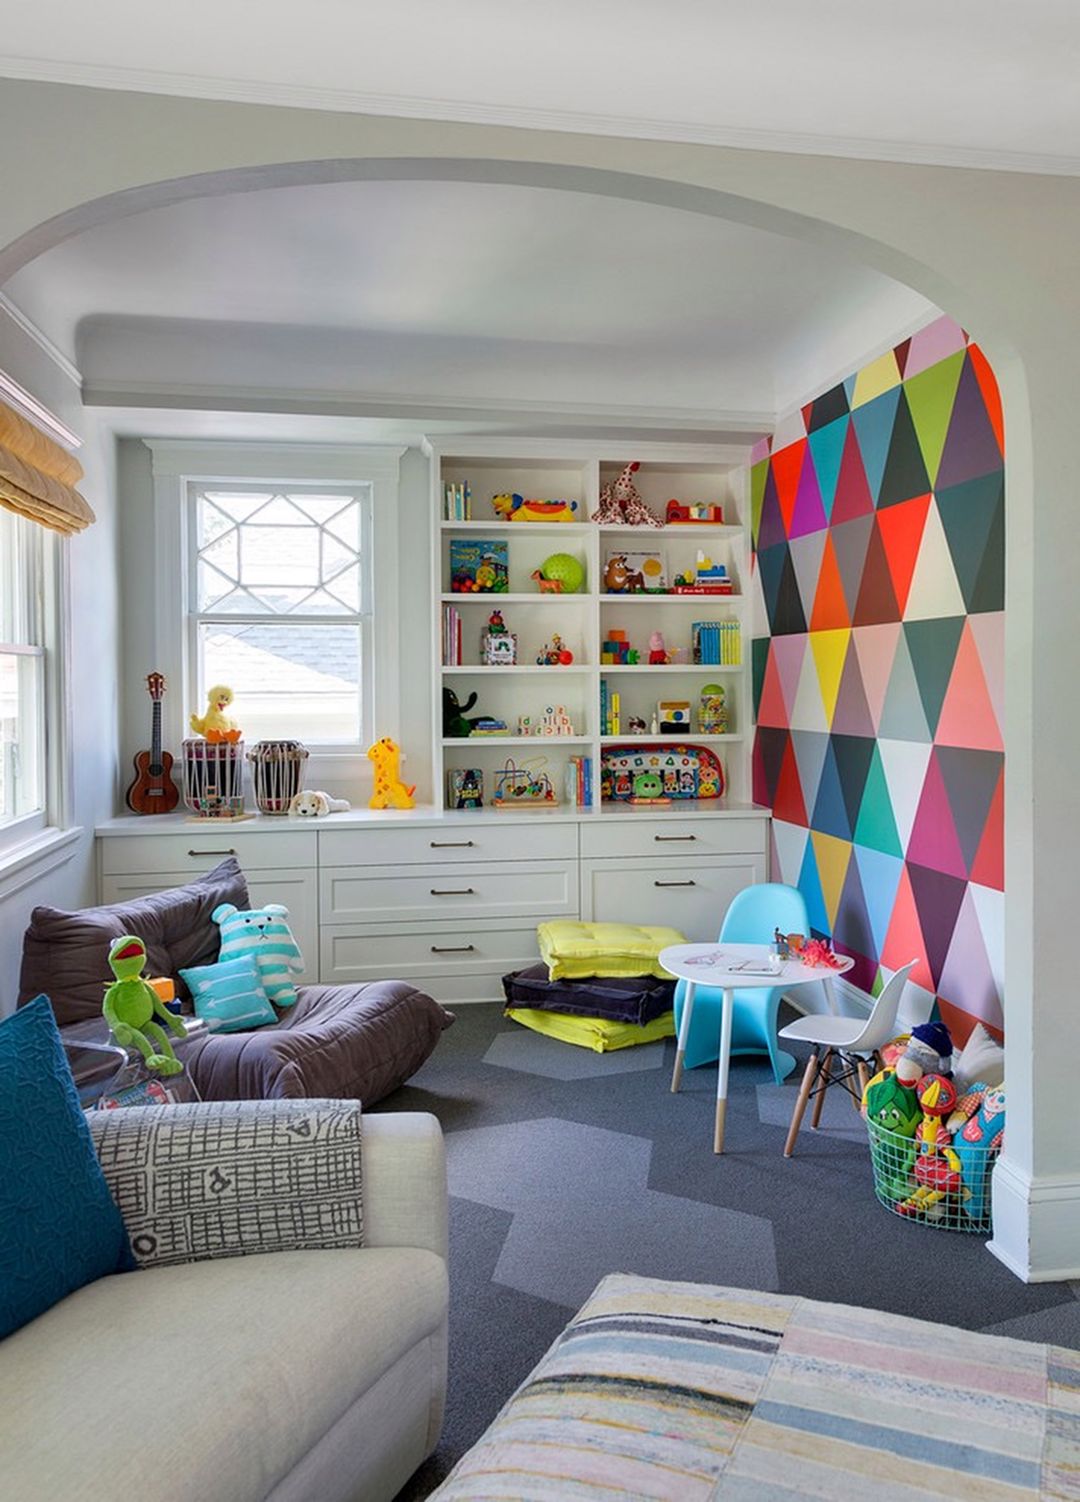 Kids Playroom Interior Decor From Househomeworld